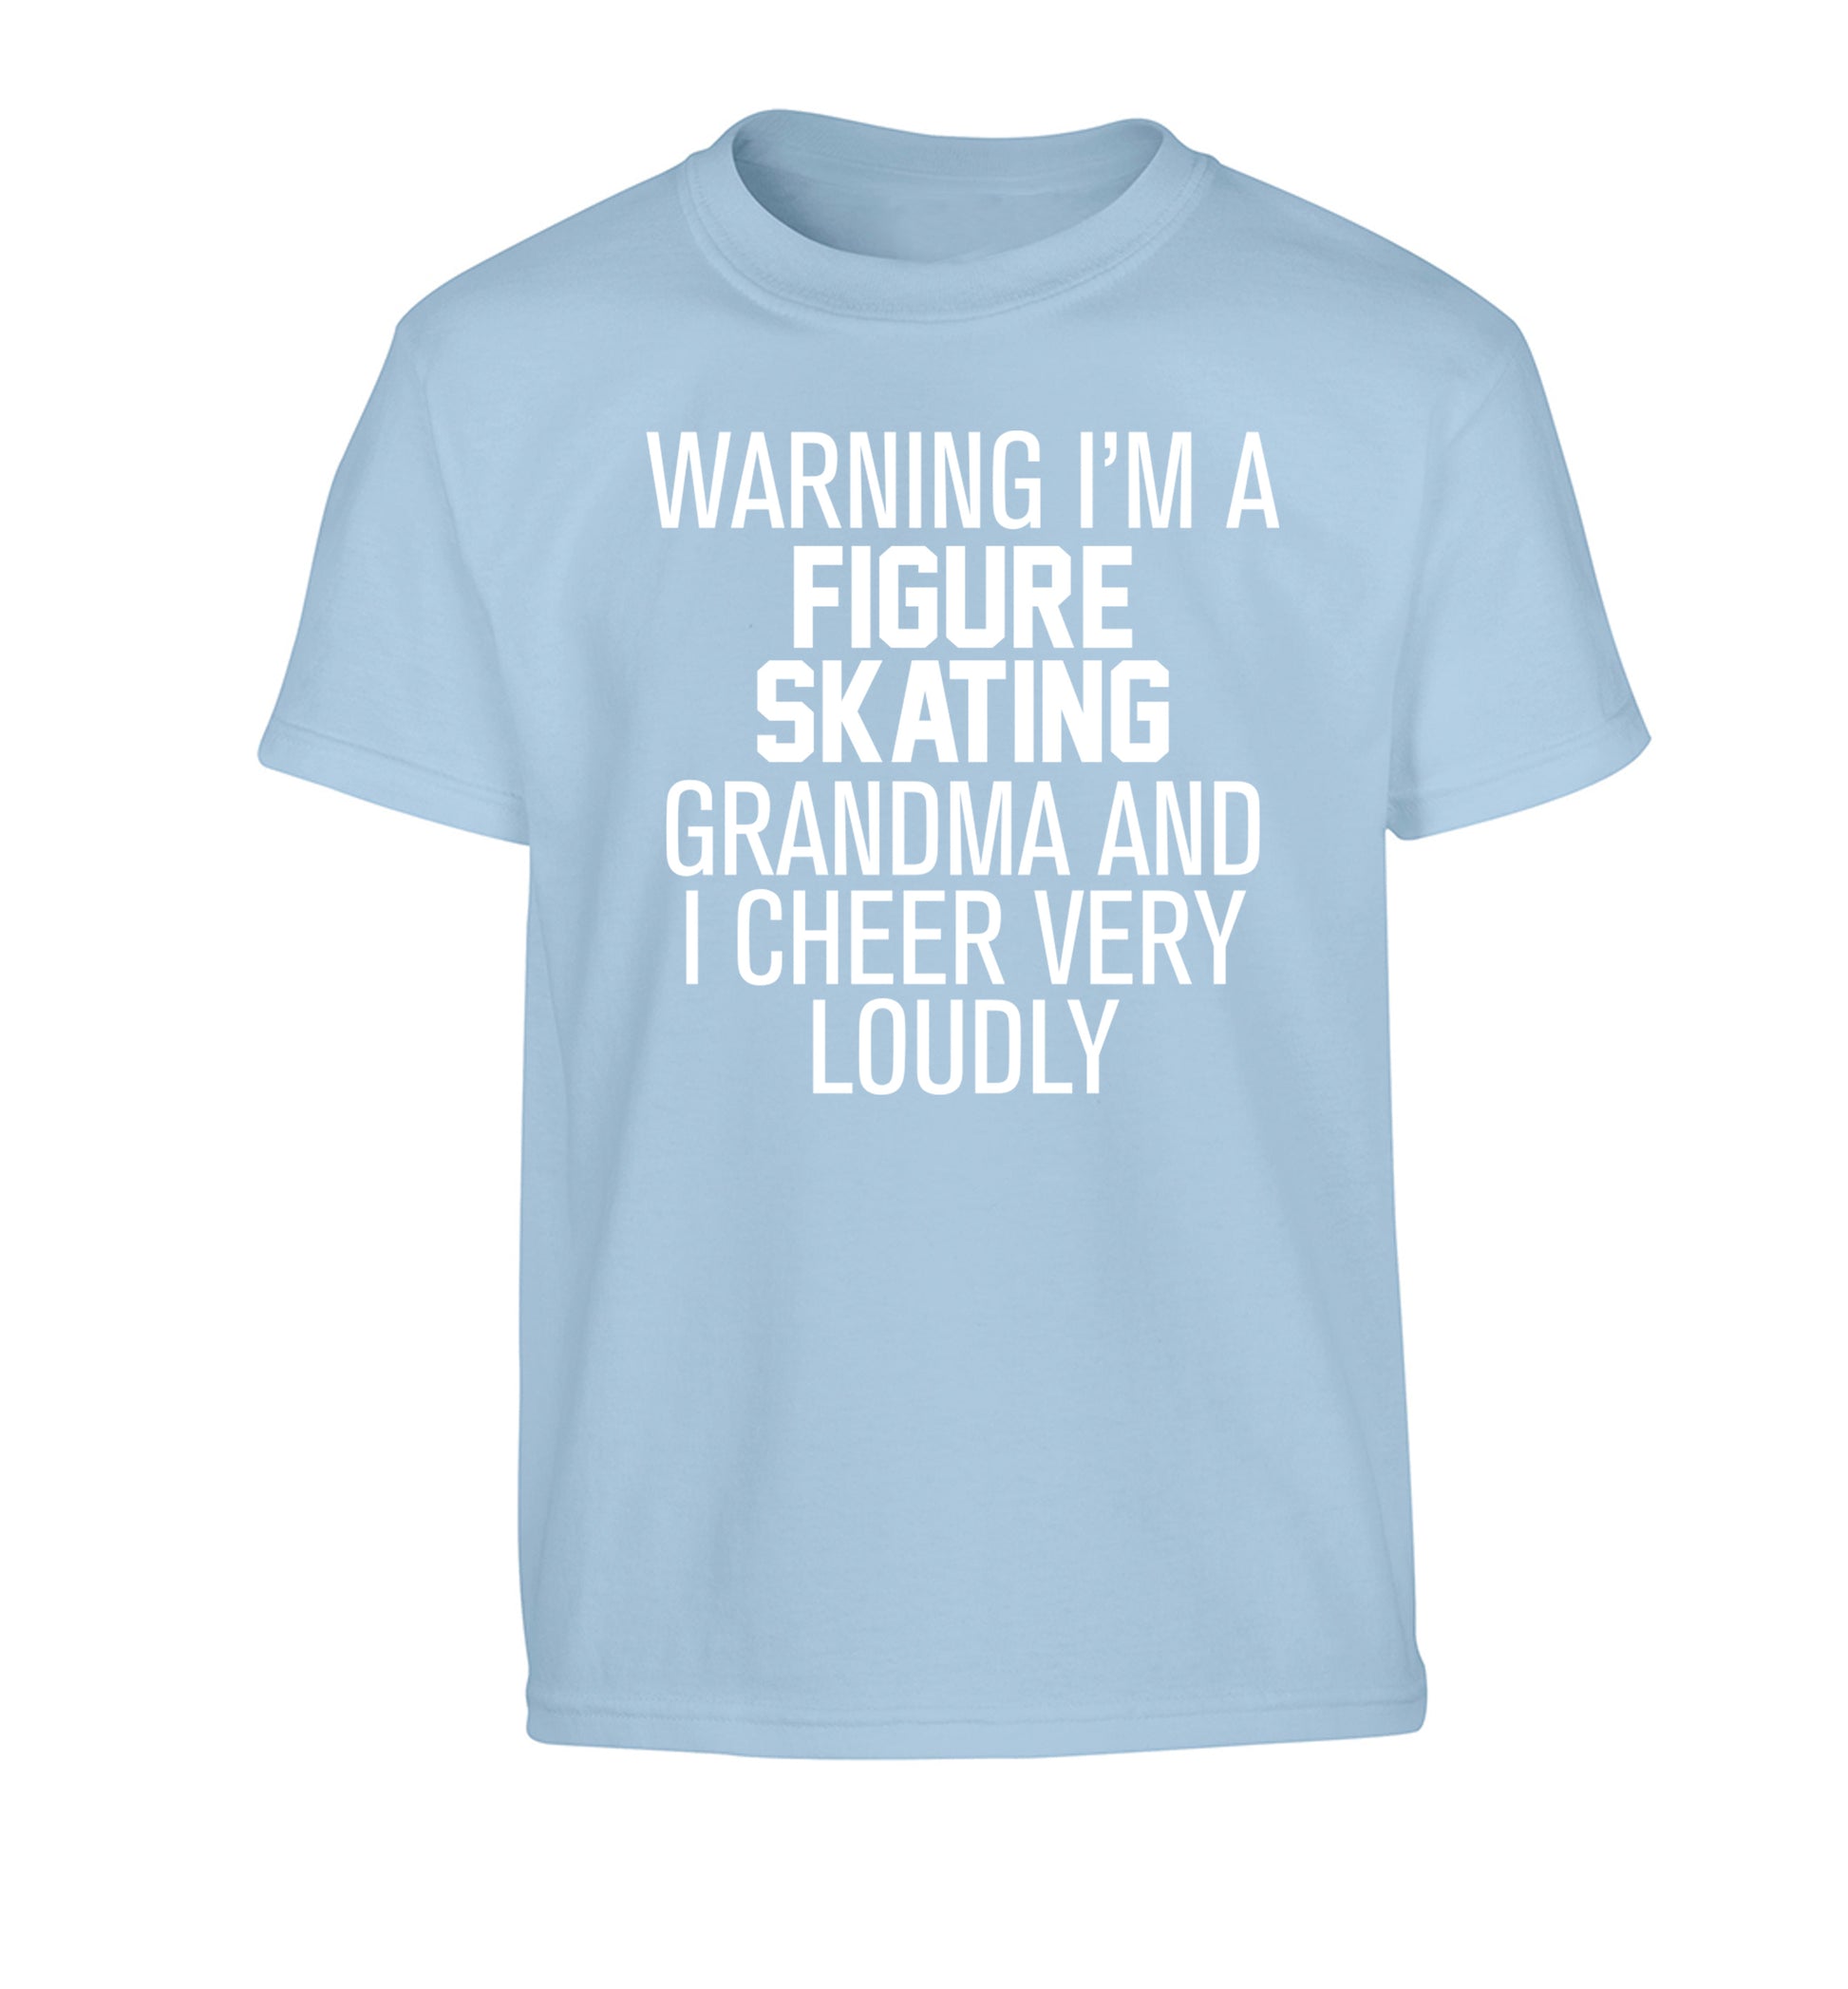 Warning I'm a figure skating grandma and I cheer very loudly Children's light blue Tshirt 12-14 Years